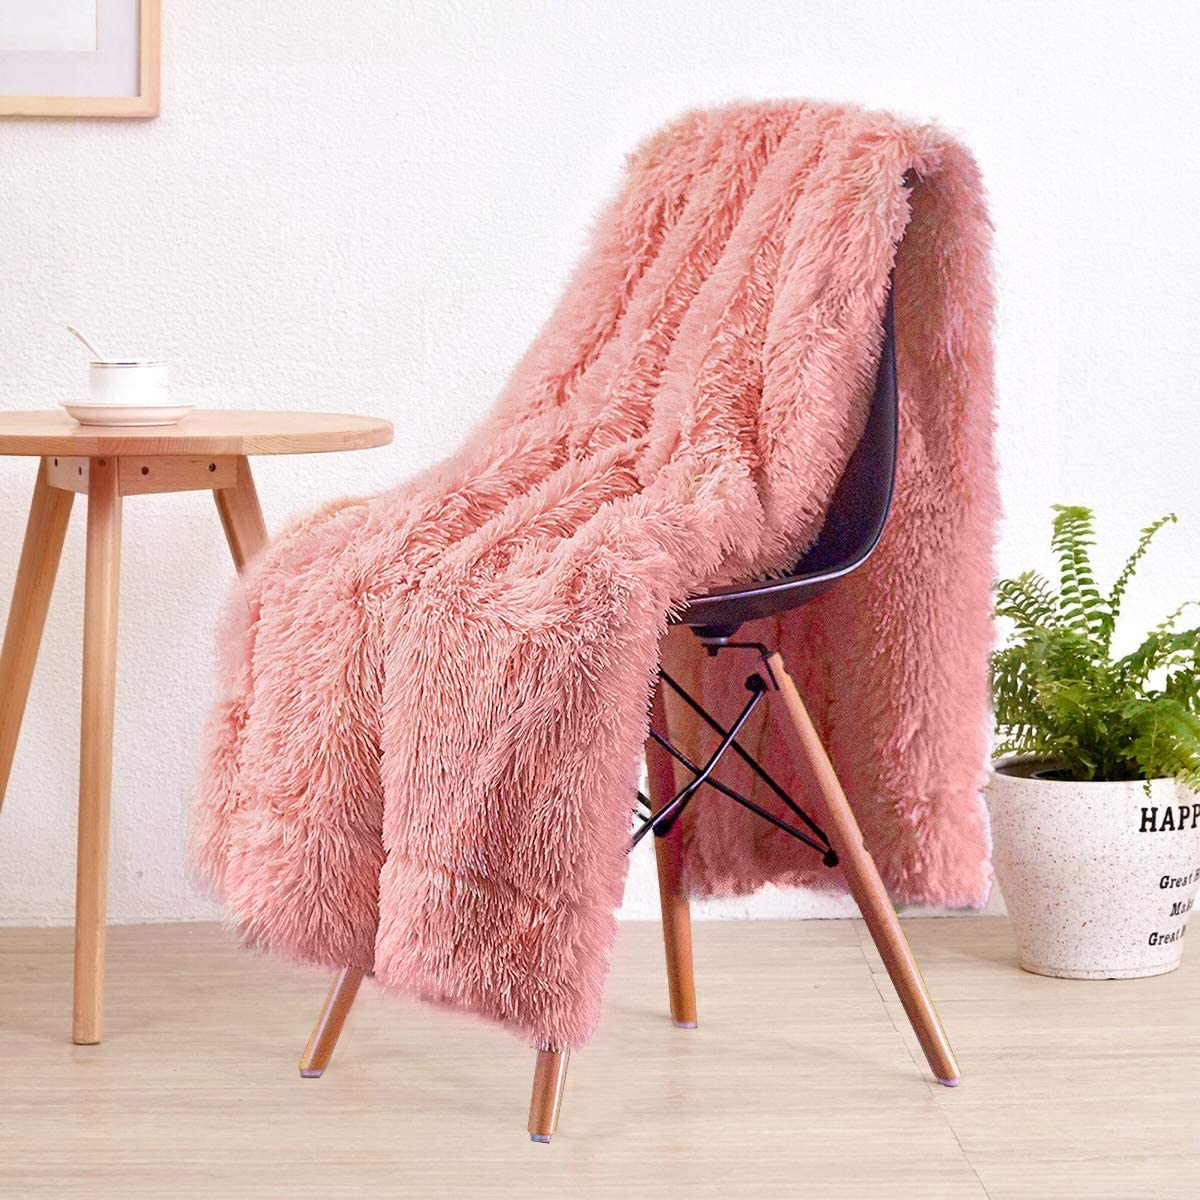 Details about   LOCHAS Super Soft Shaggy Faux Fur Blanket Plush Fuzzy Bed Throw Decorative Wash 